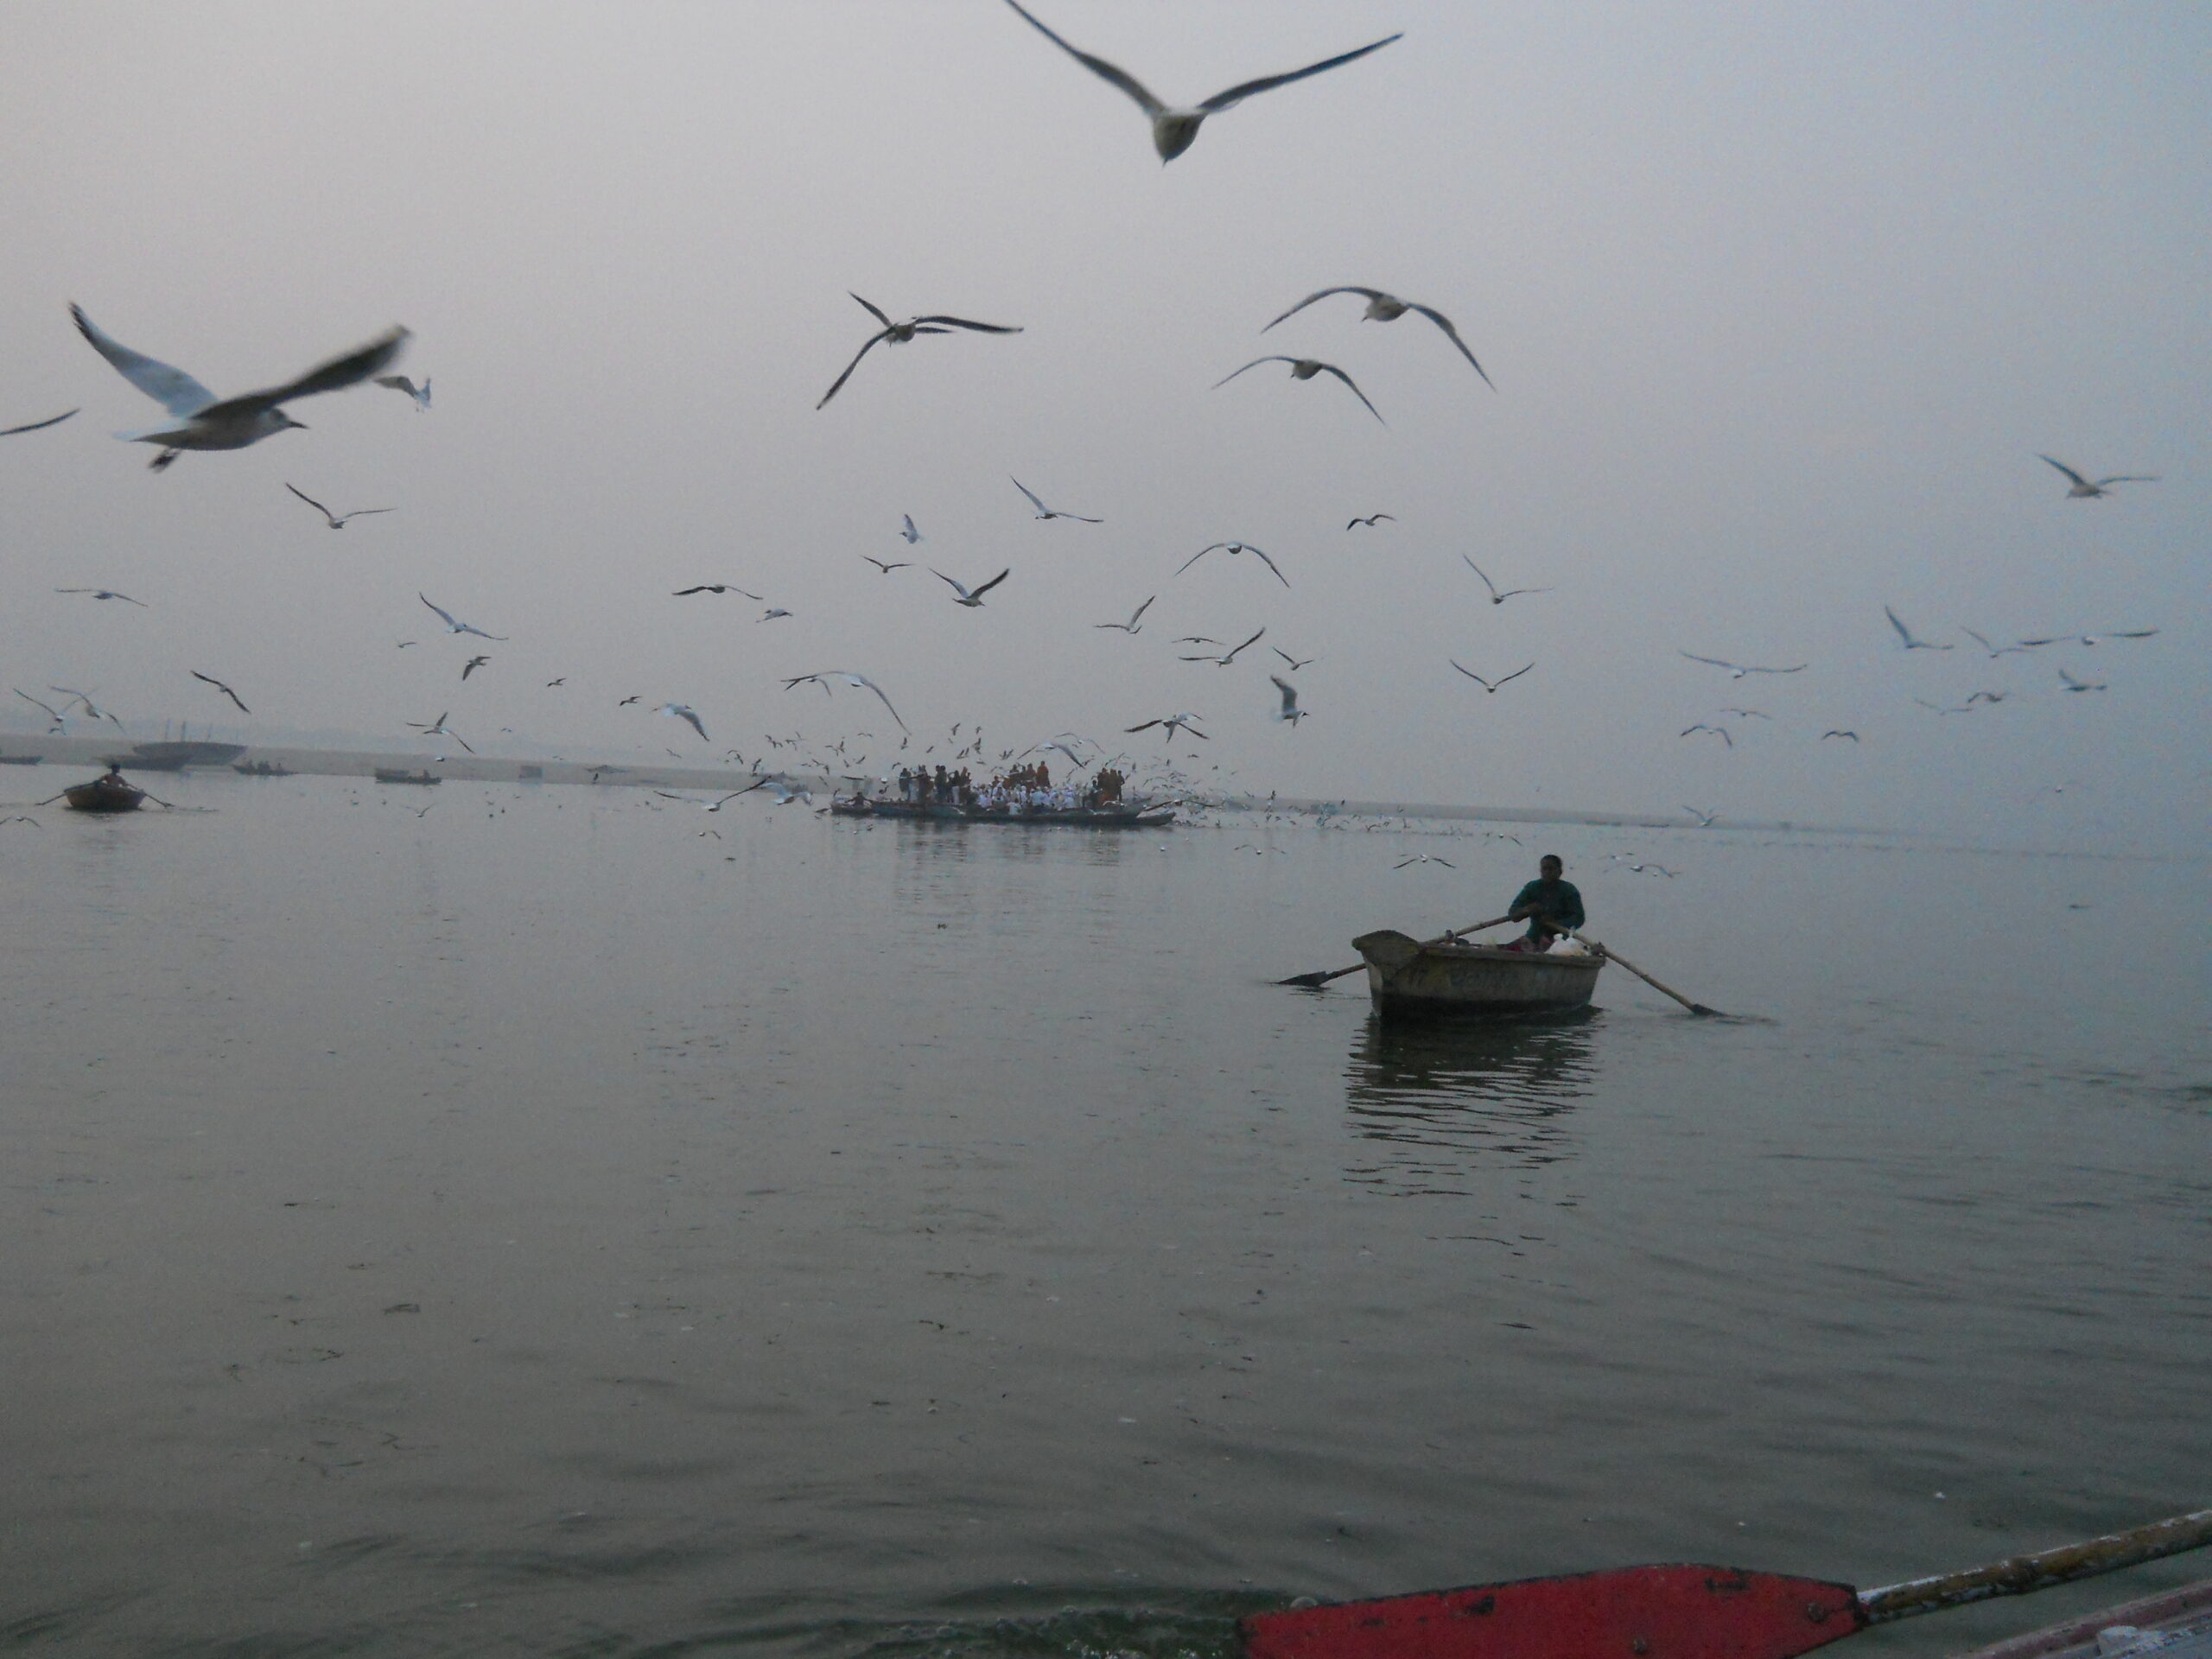 The Ganges sacred river in Varanasi, Land of Shiva